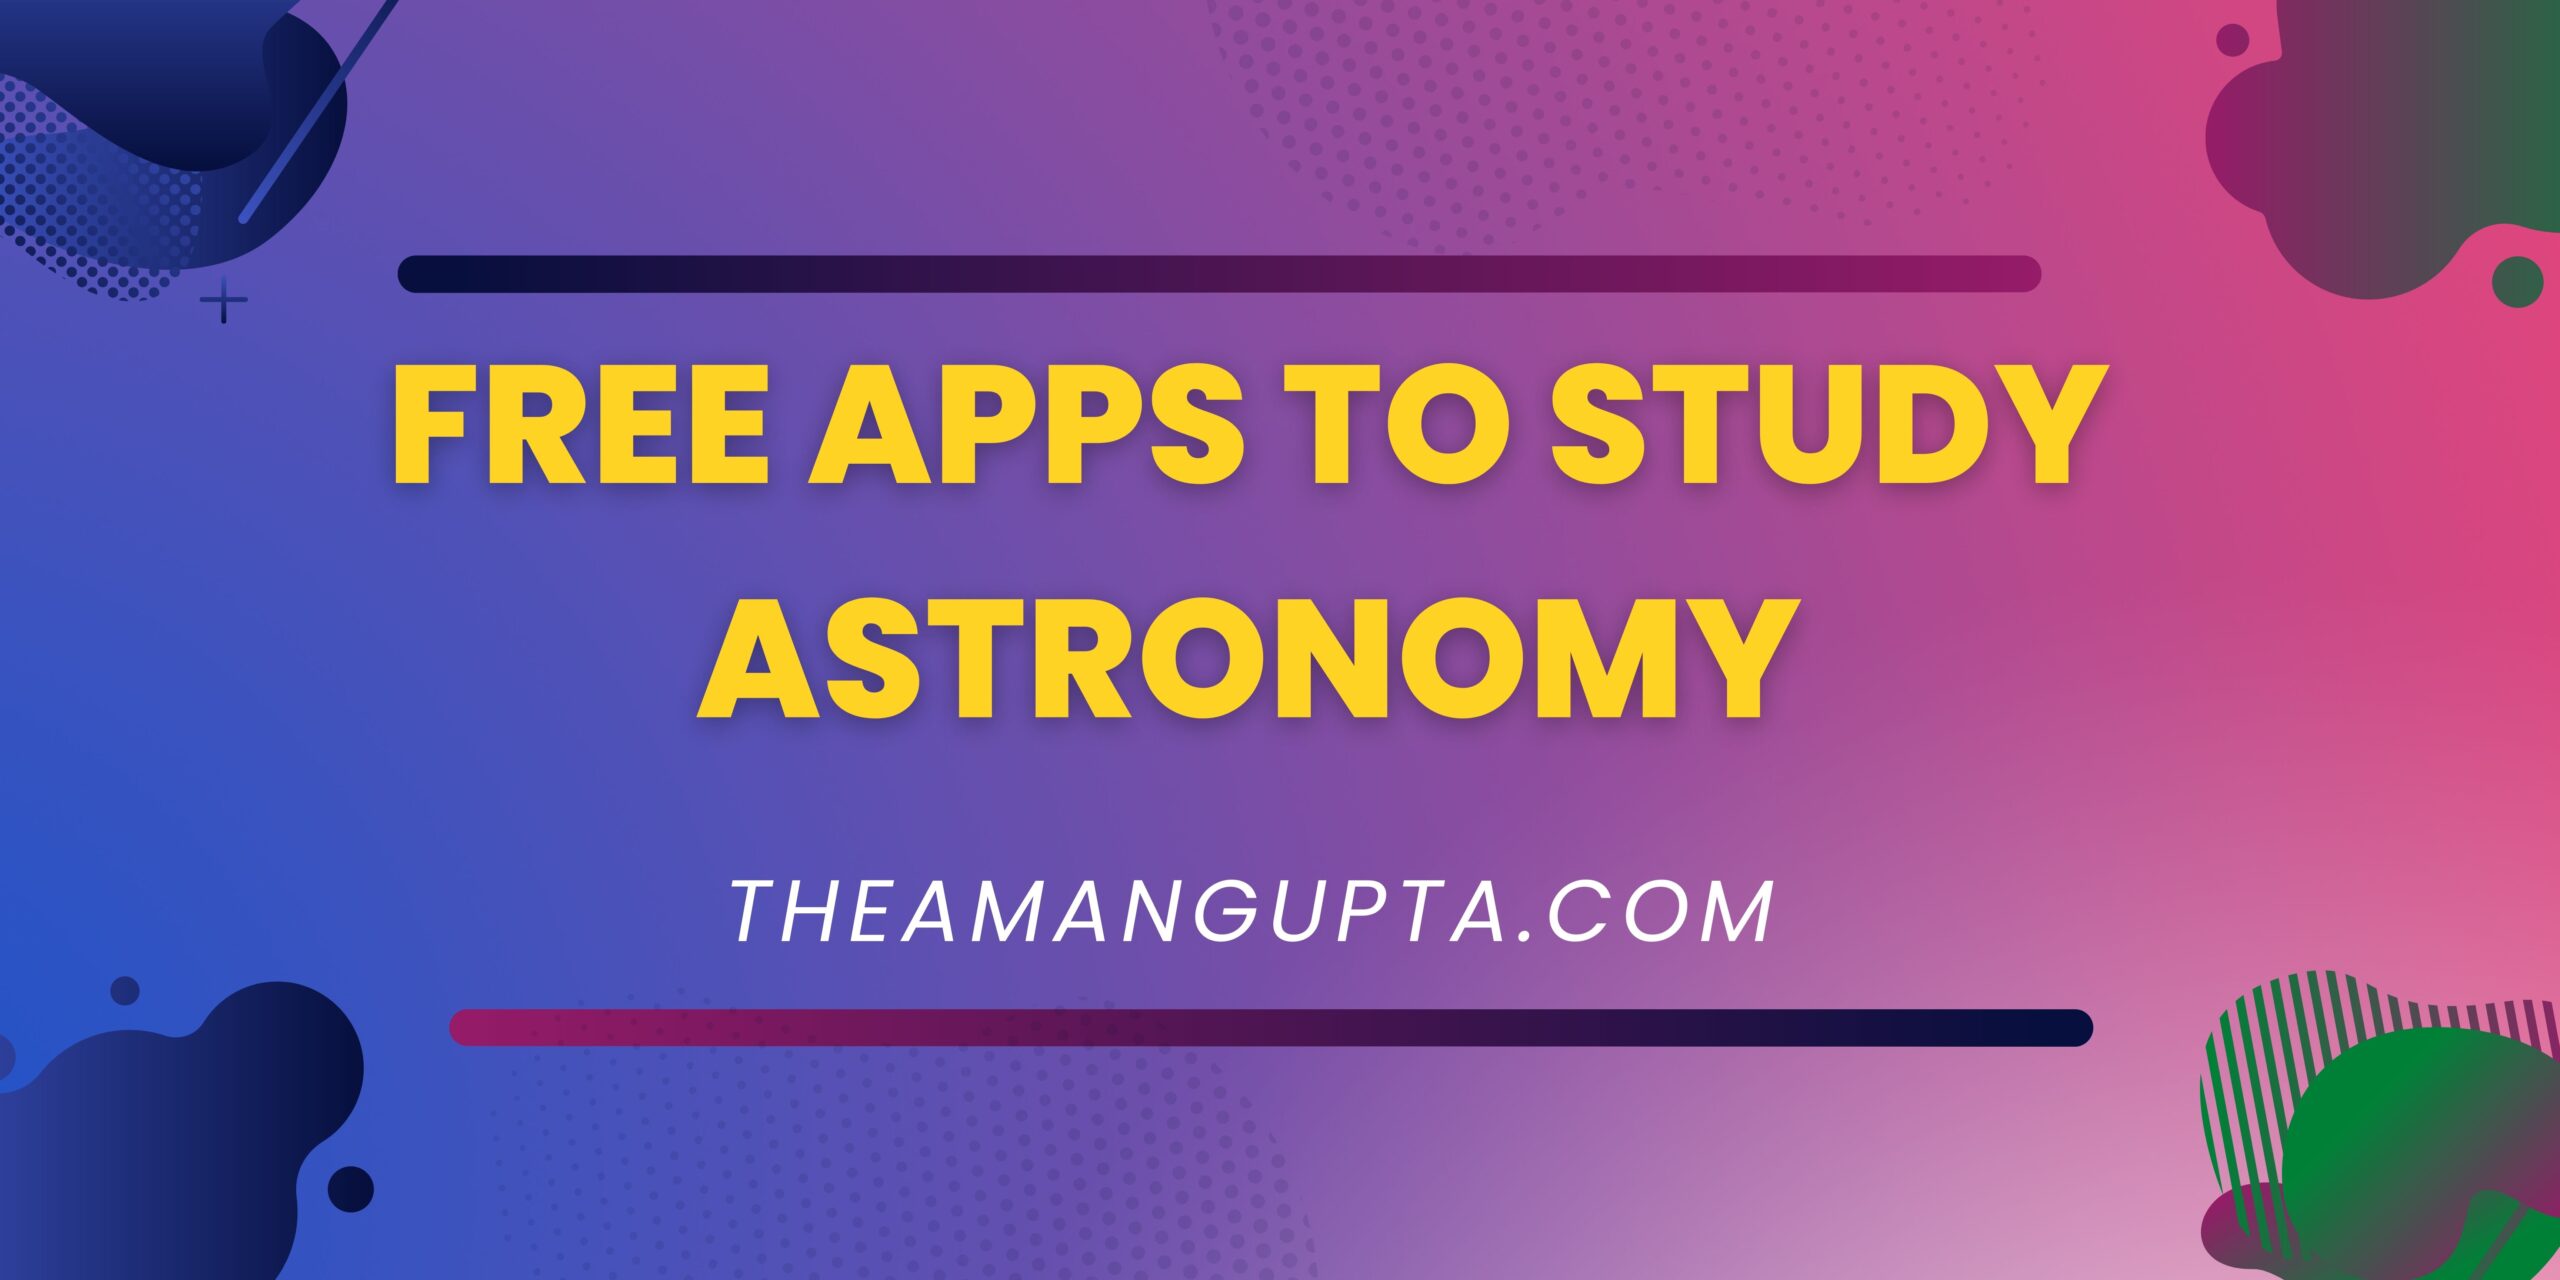 Free Apps To Study Astronomy|Free Apps To Study Astronomy|Tannu Rani|Theamangupta